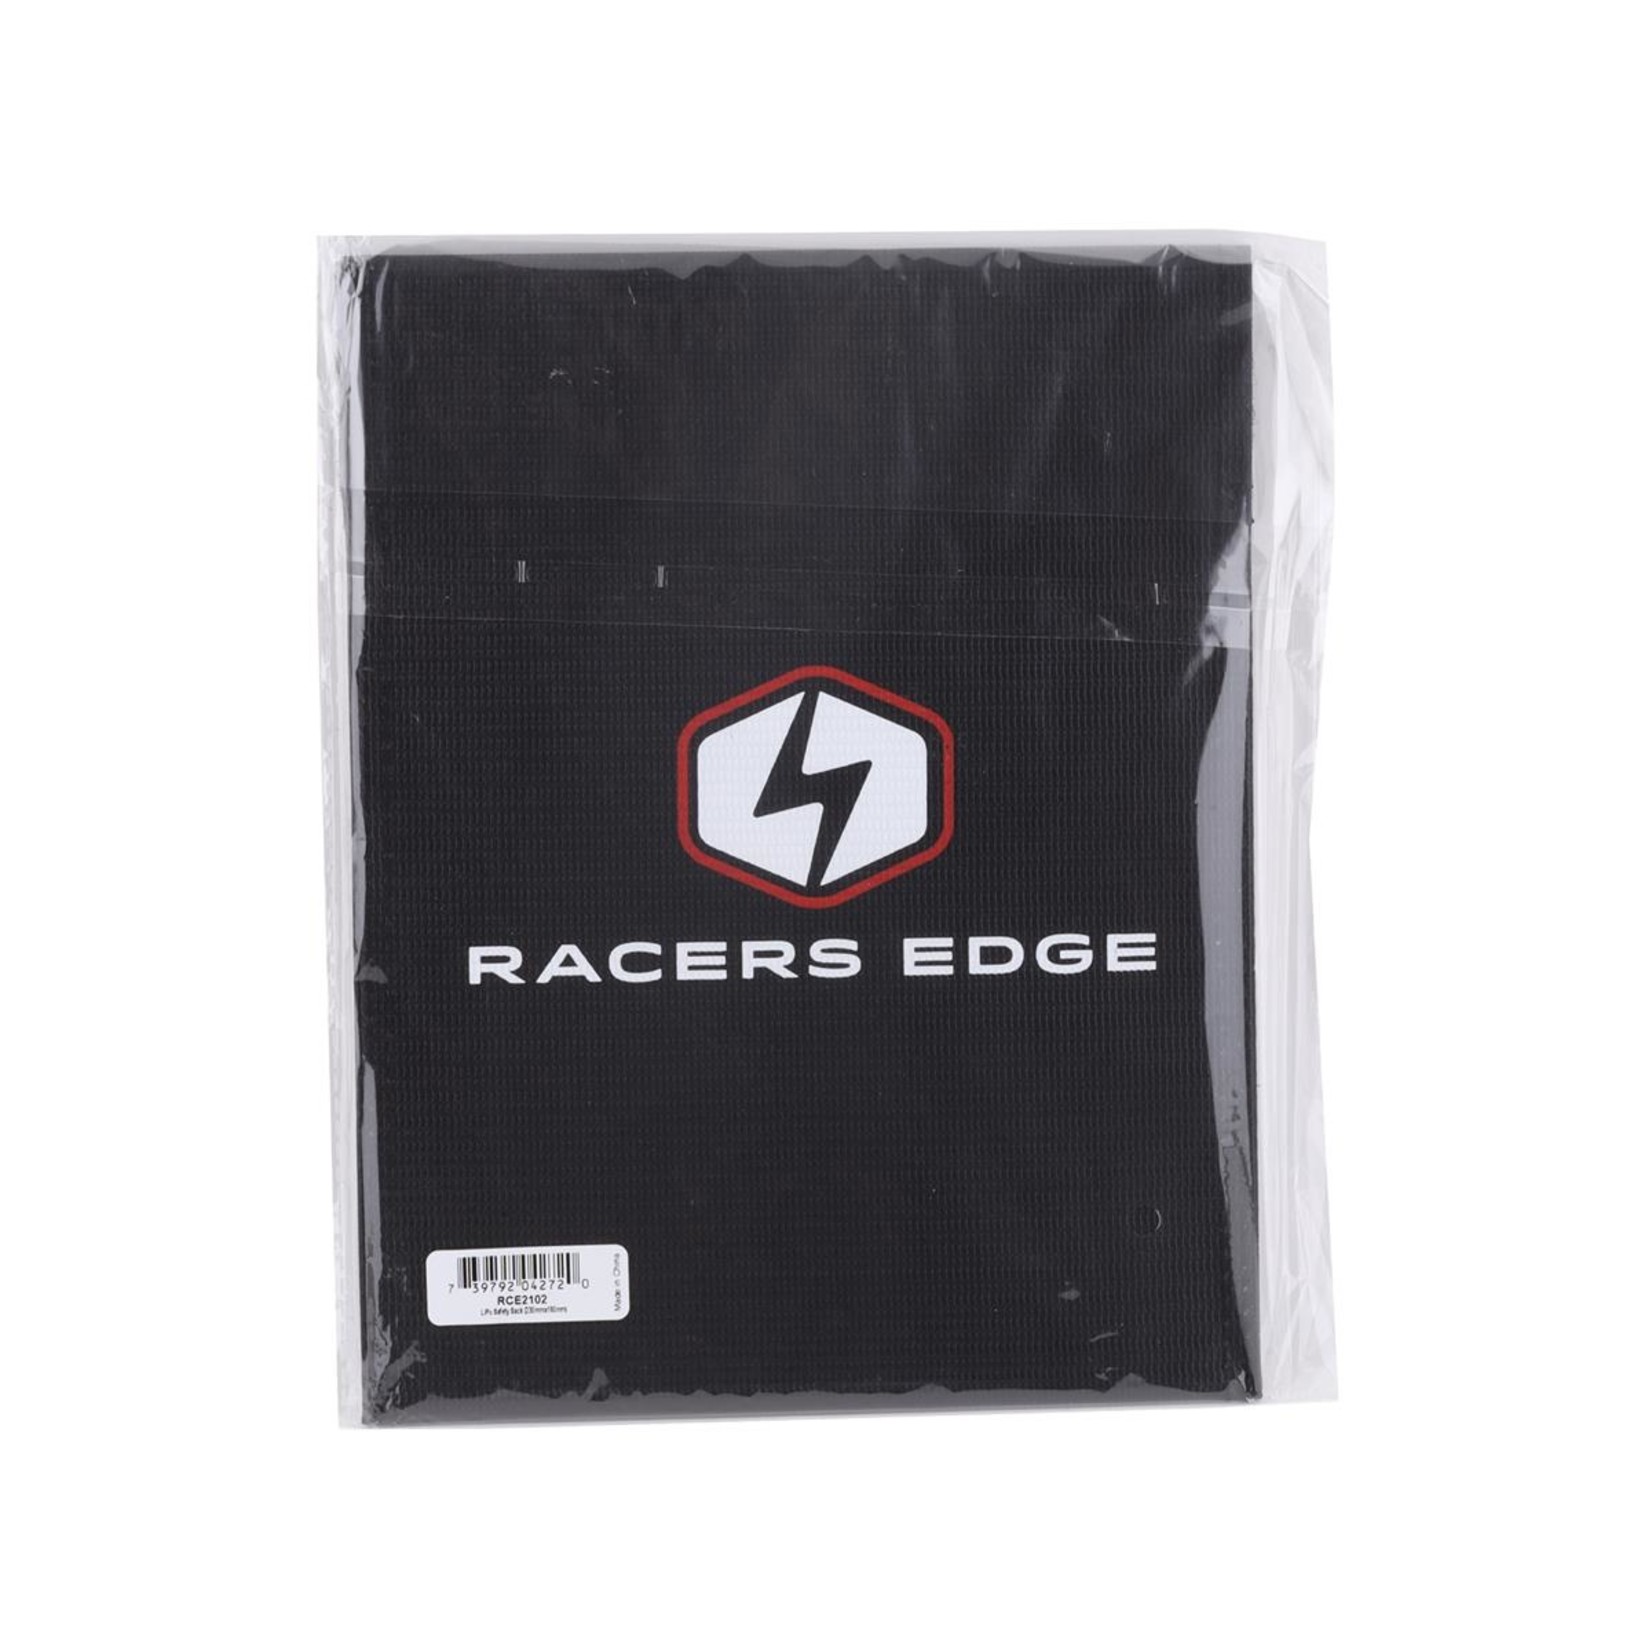 Racers Edge Racers Edge LiPo Safety Sack (230x180mm) #RCE2102